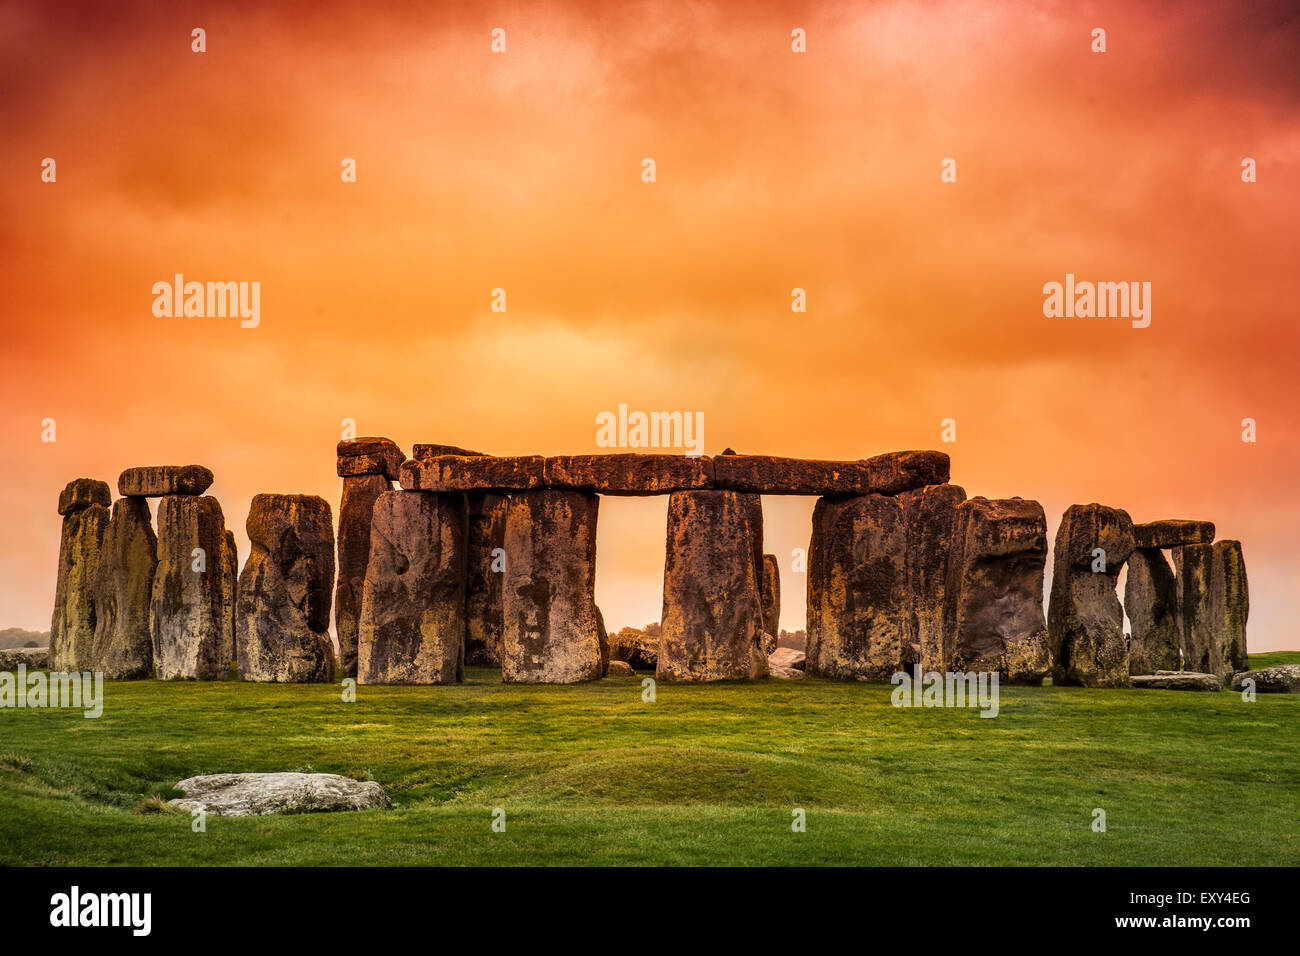 Stonehenge vor feurigen orange sunset Himmel Stockfoto